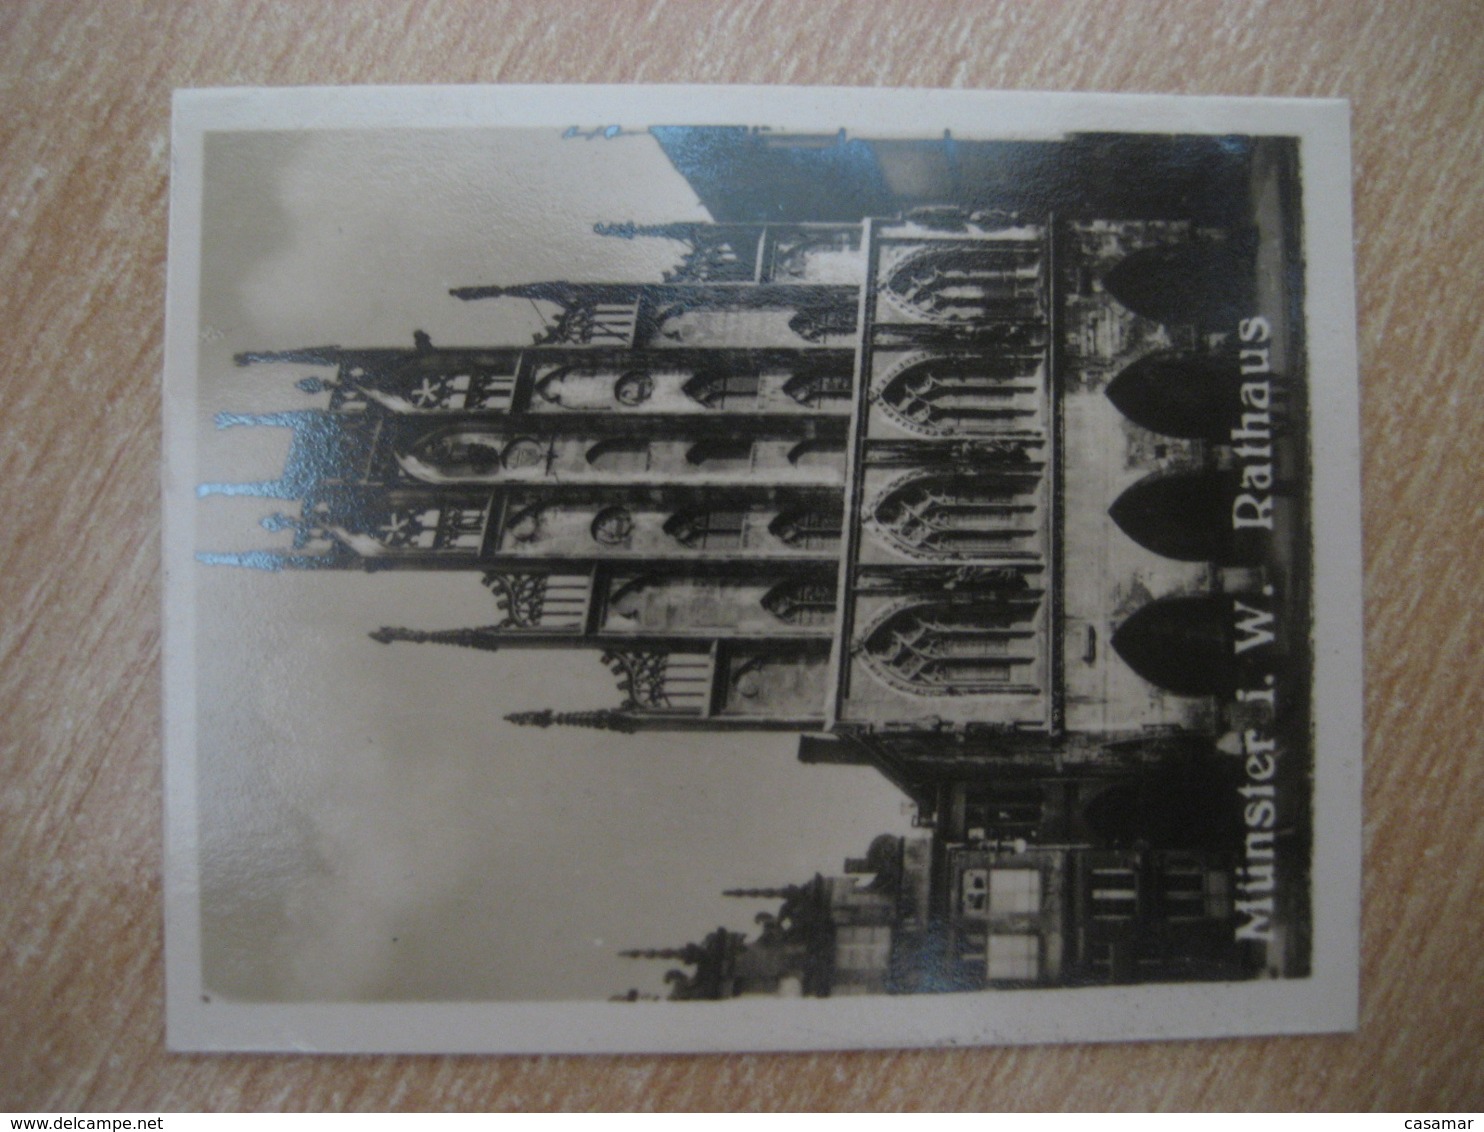 MUNSTER Rathaus Bilder Card Photo Photography (4x5,2cm) Westfalen Westfalia GERMANY 30s Tobacco - Non Classés